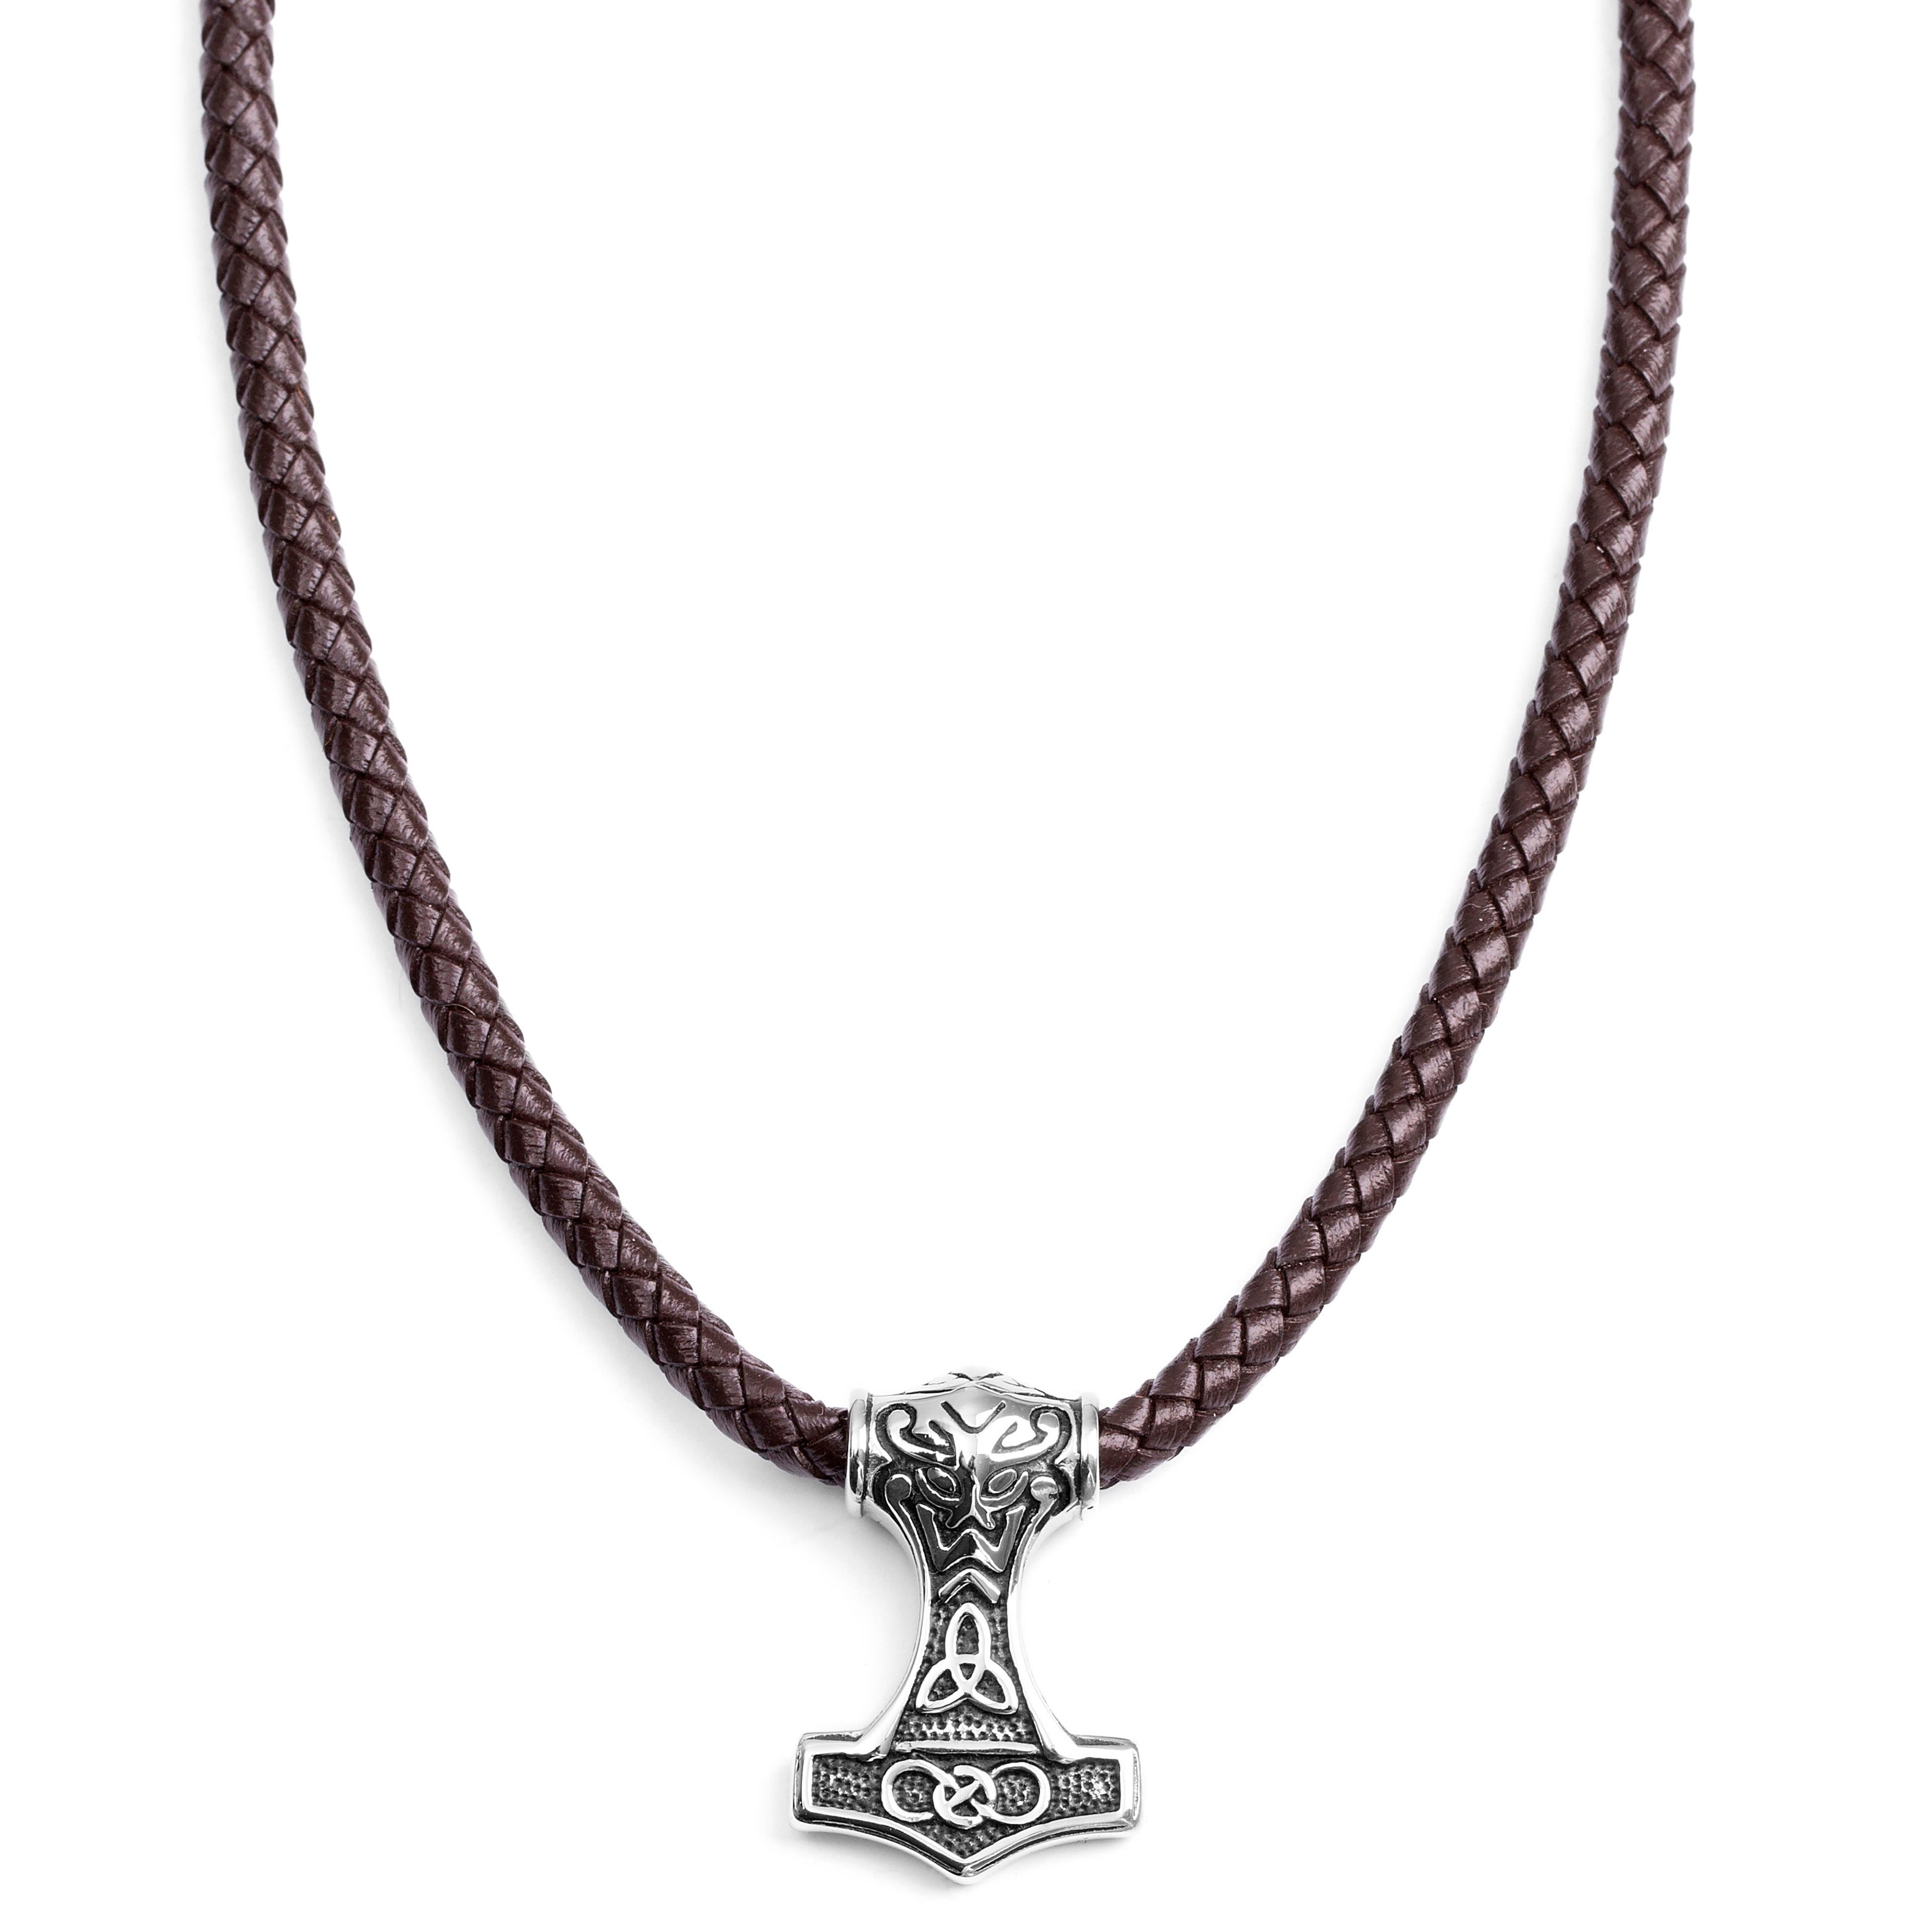 Hnedý obojstranný kožený náhrdelník s keltským motívom